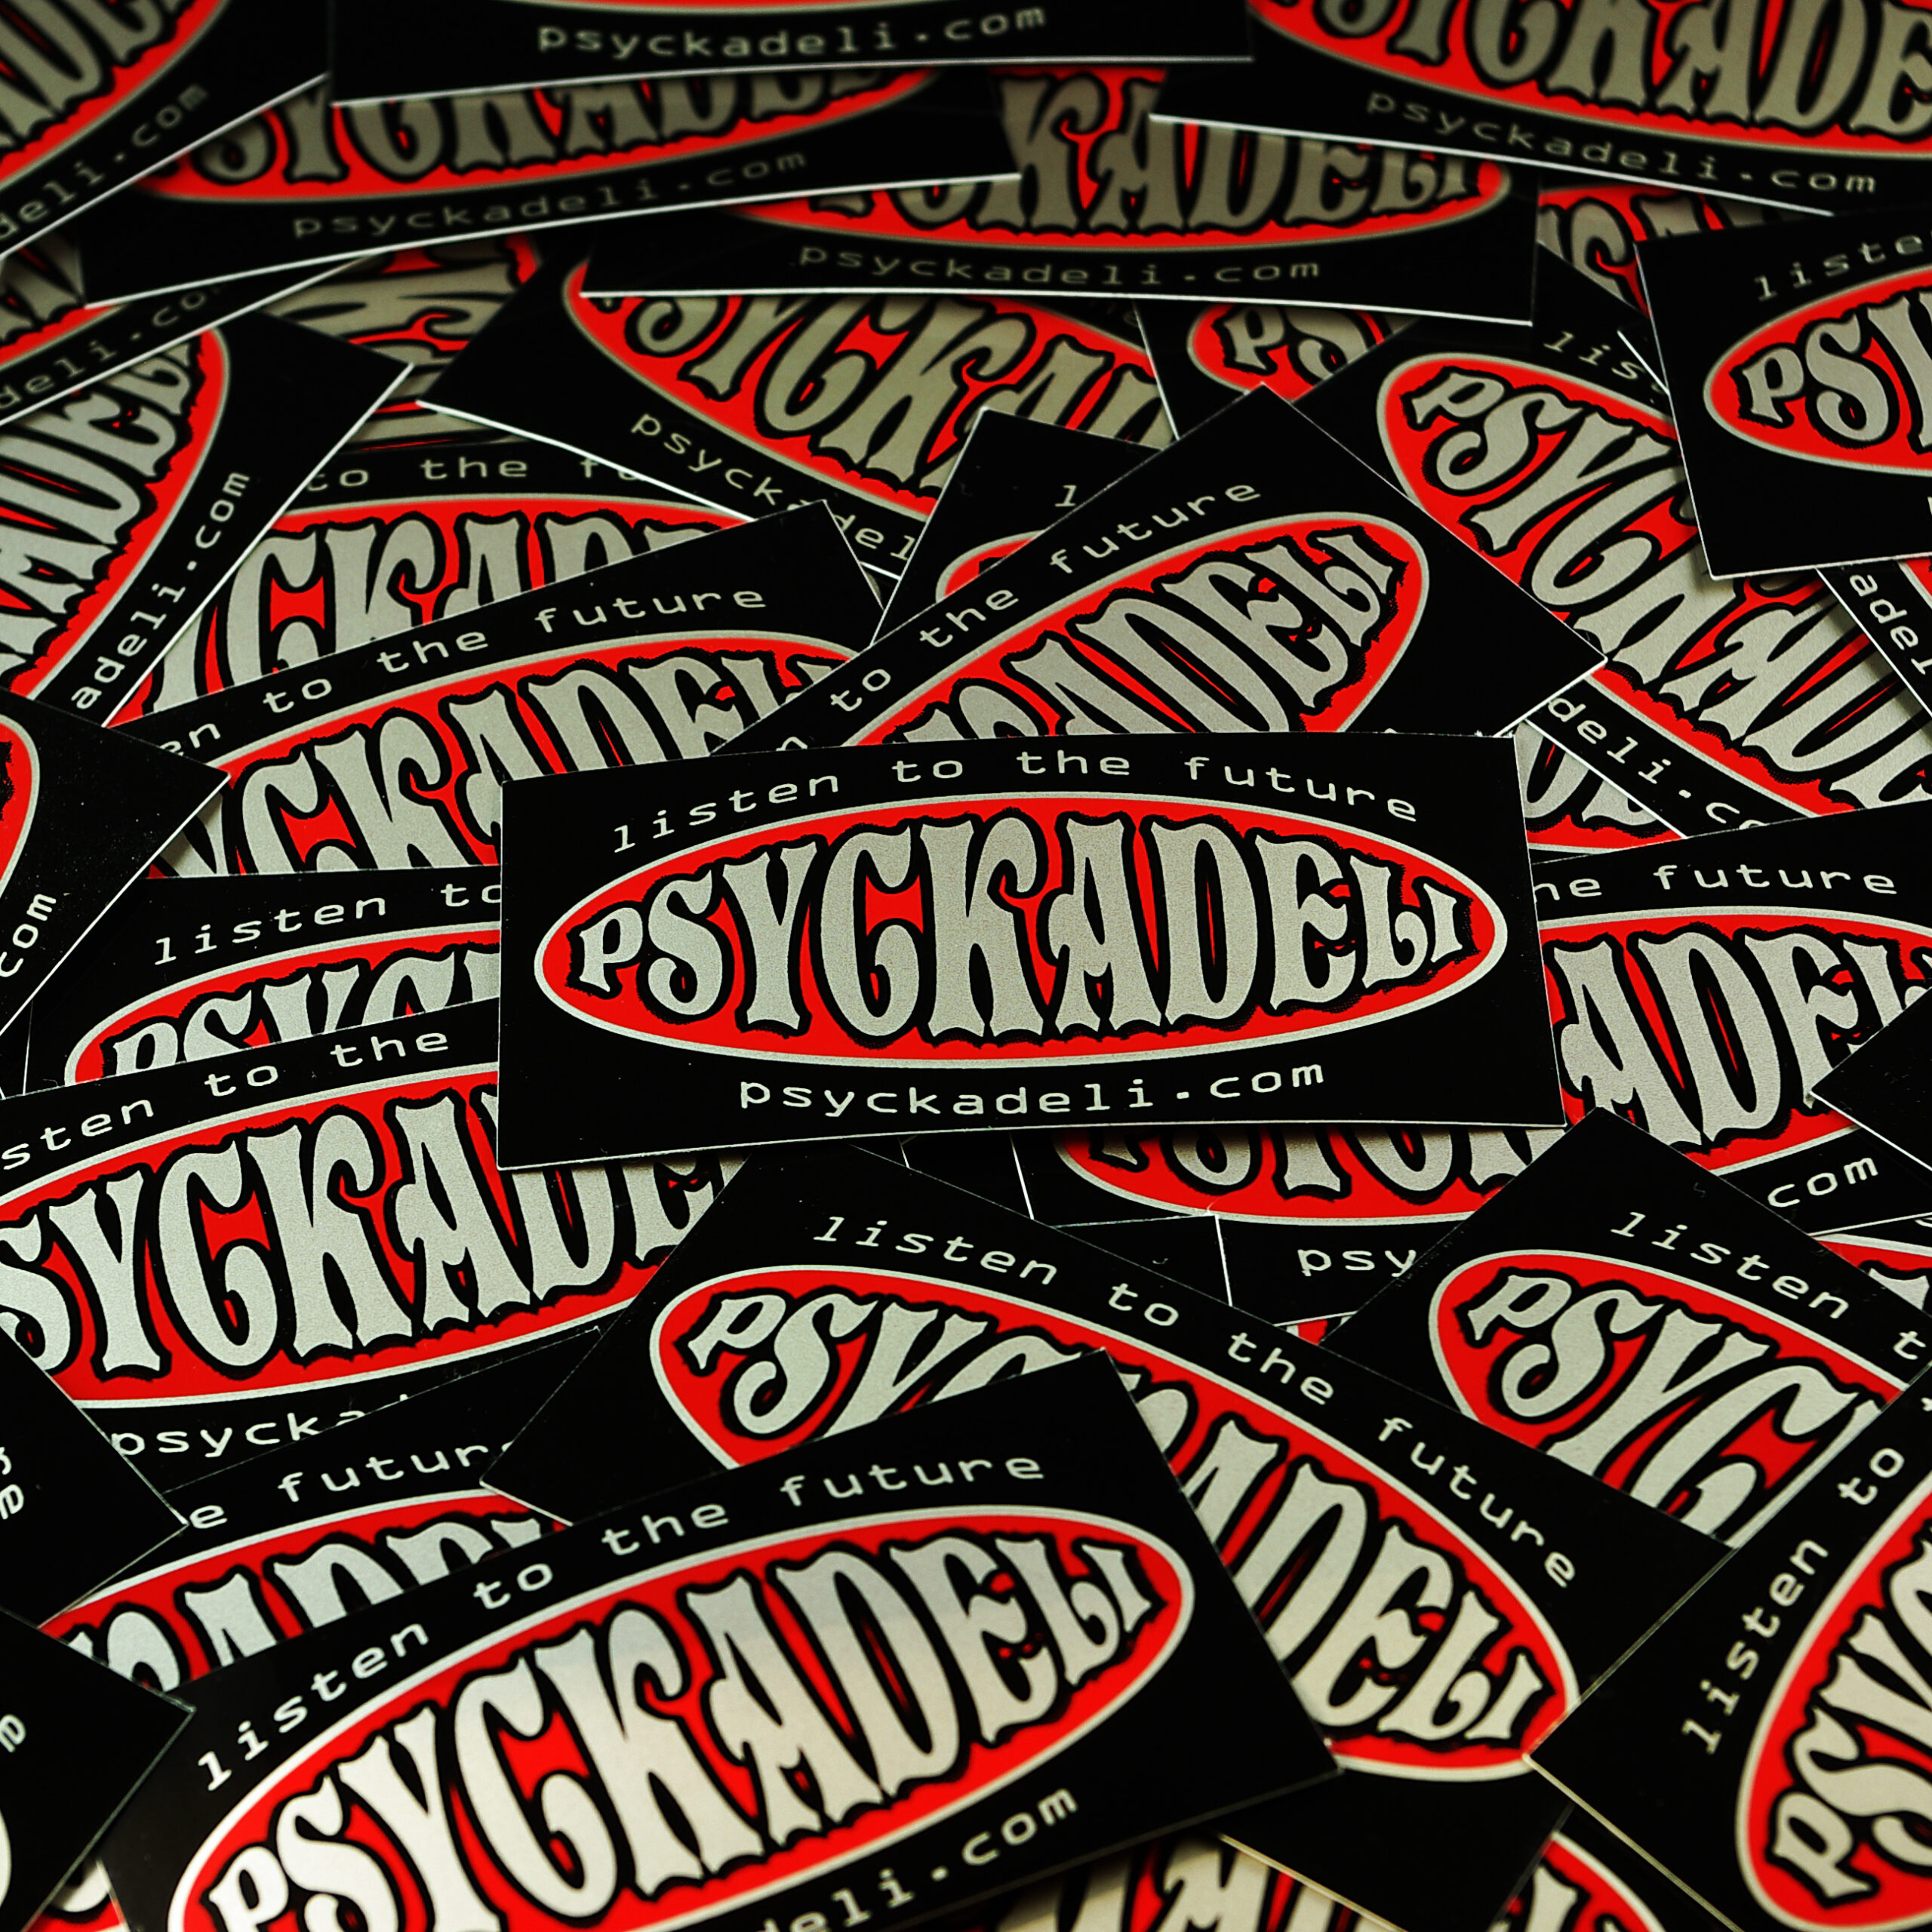 Psychobilly Psychobilly - Hi-Octane Club - Patch Keychains Stickers -   - Biggest Patch Shop worldwide